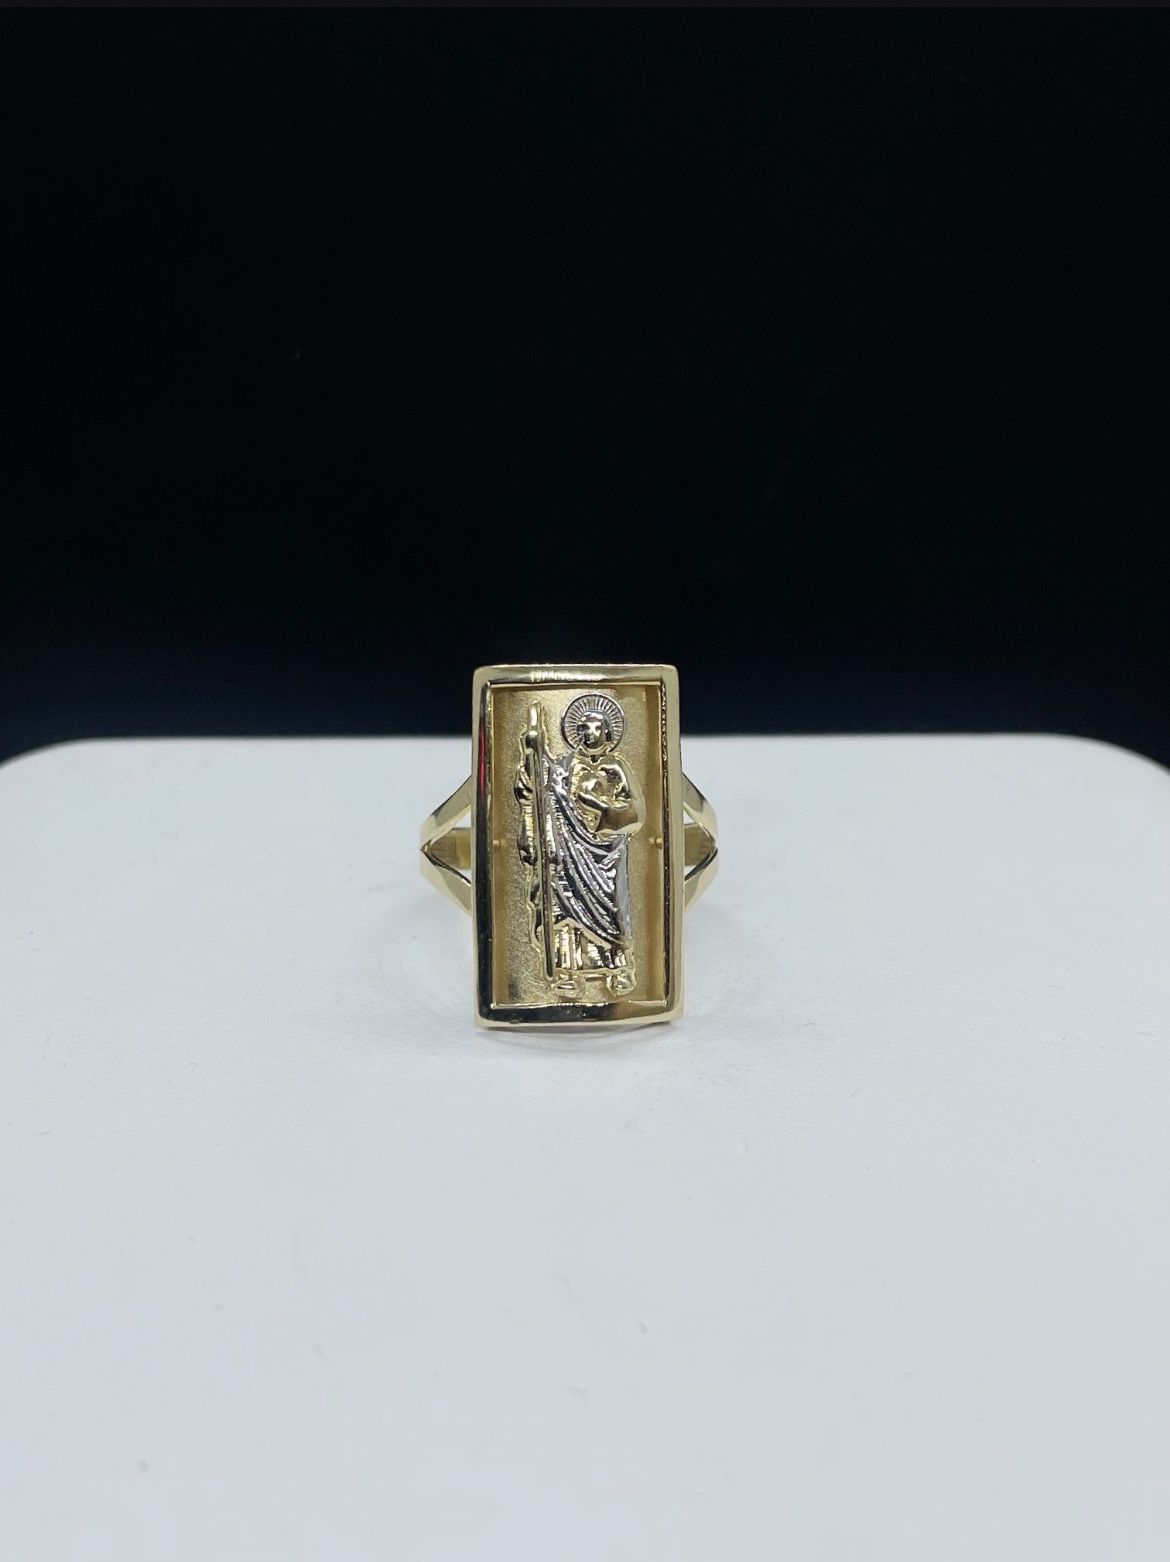 14k solid Gold San Judas Ring